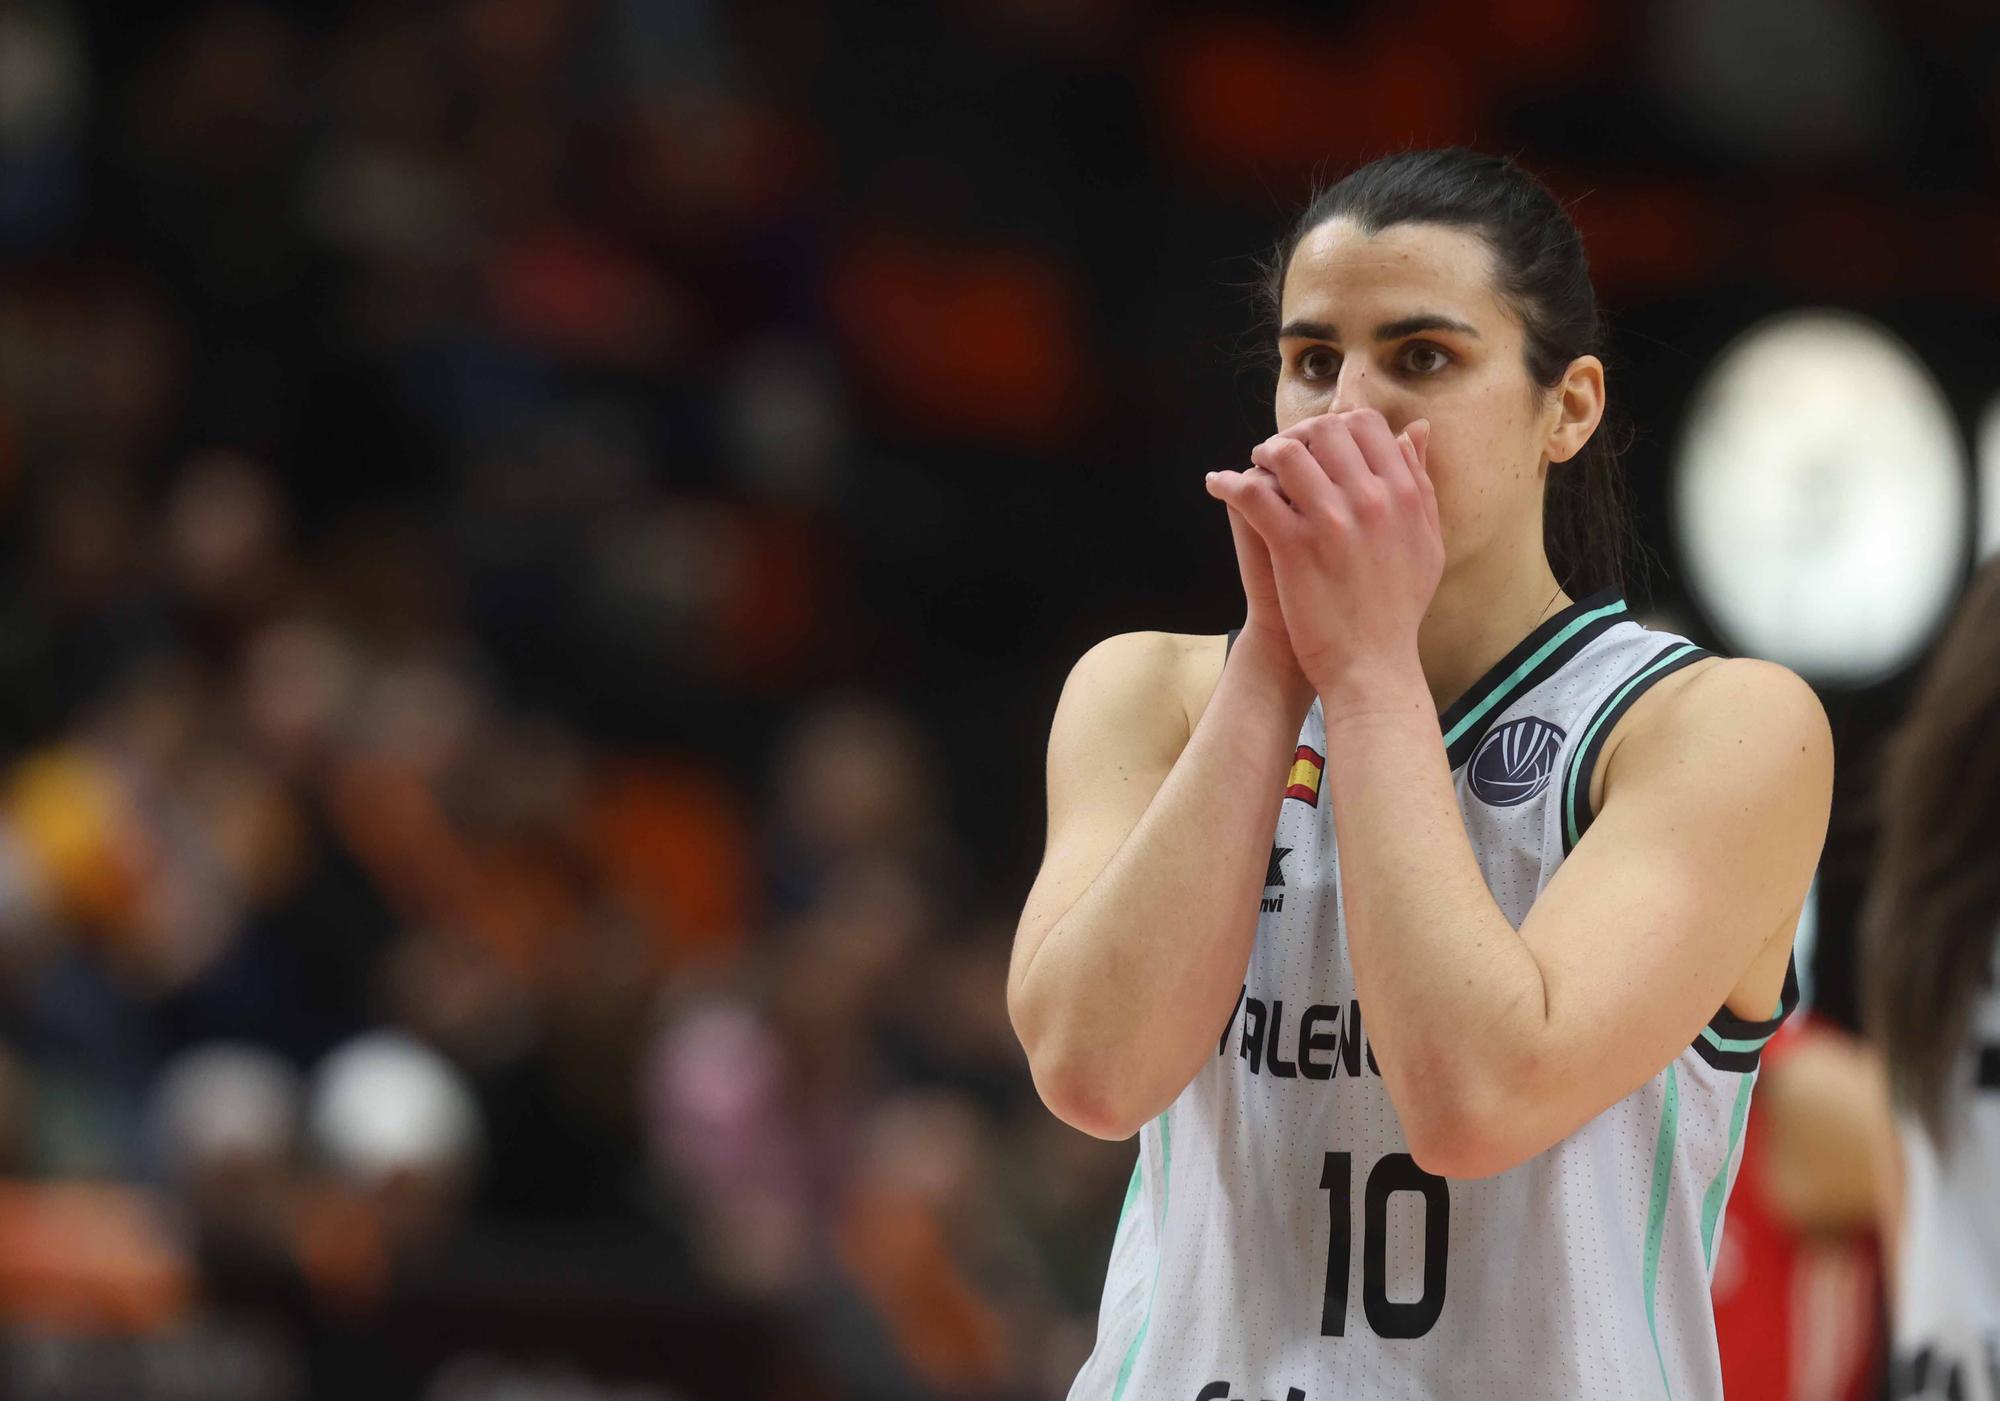 Valencia Basket - Olympiacos de Euroleague Women